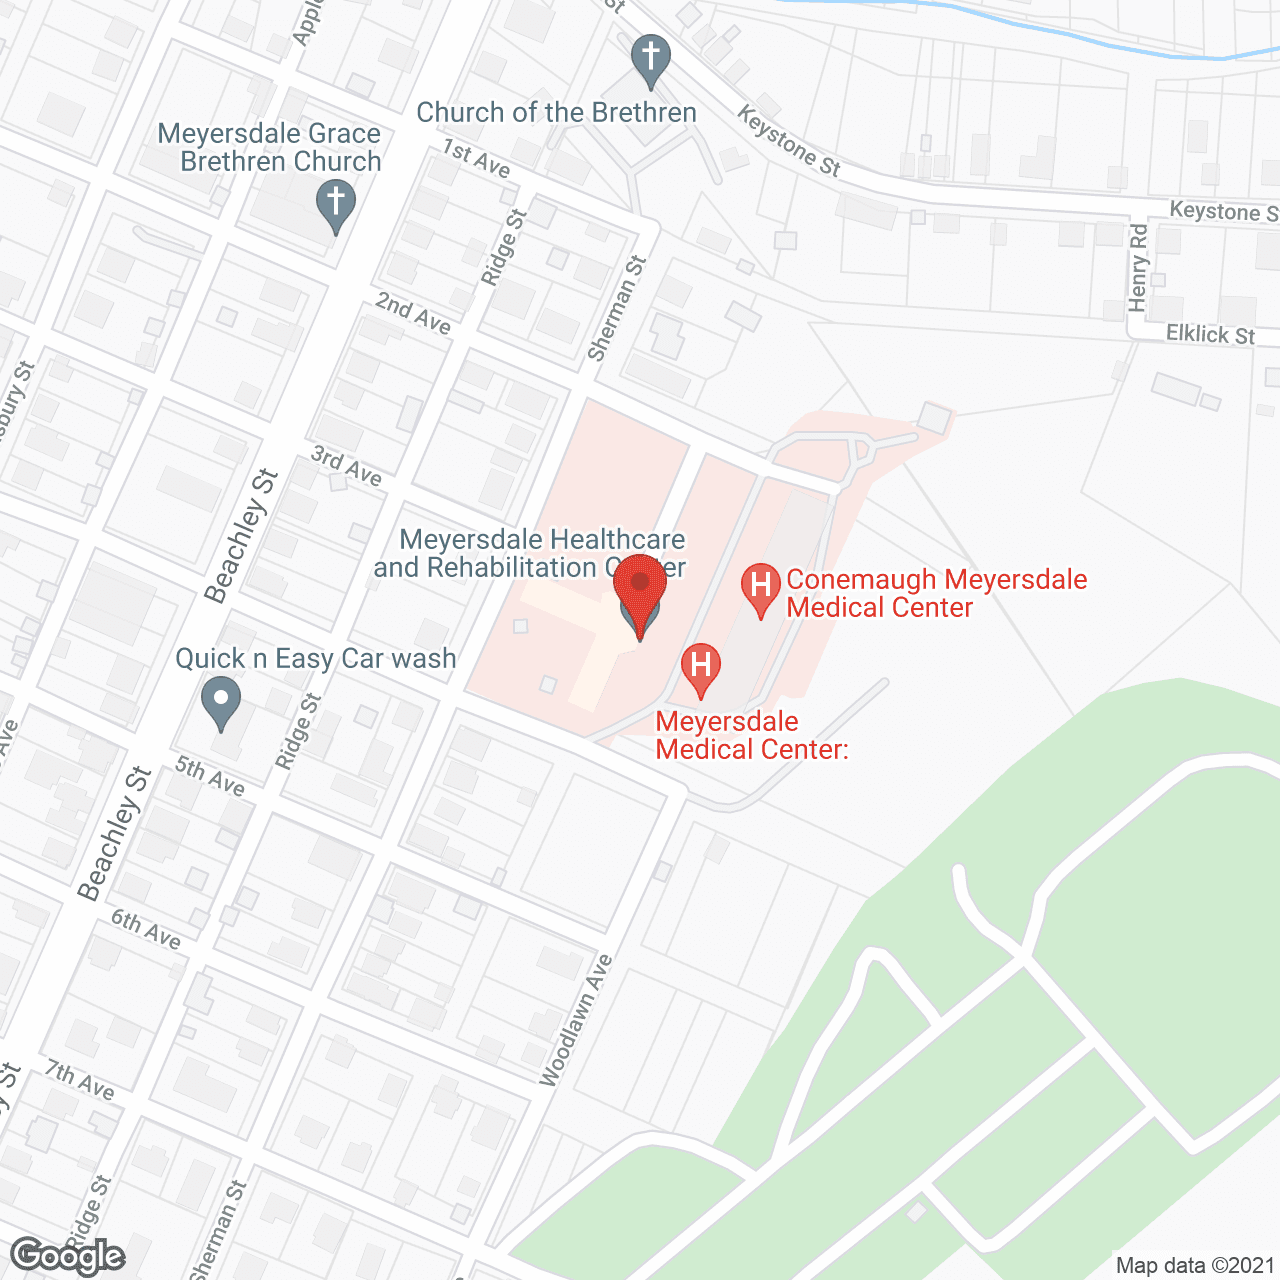 Golden LivingCenter - Meyersdale in google map